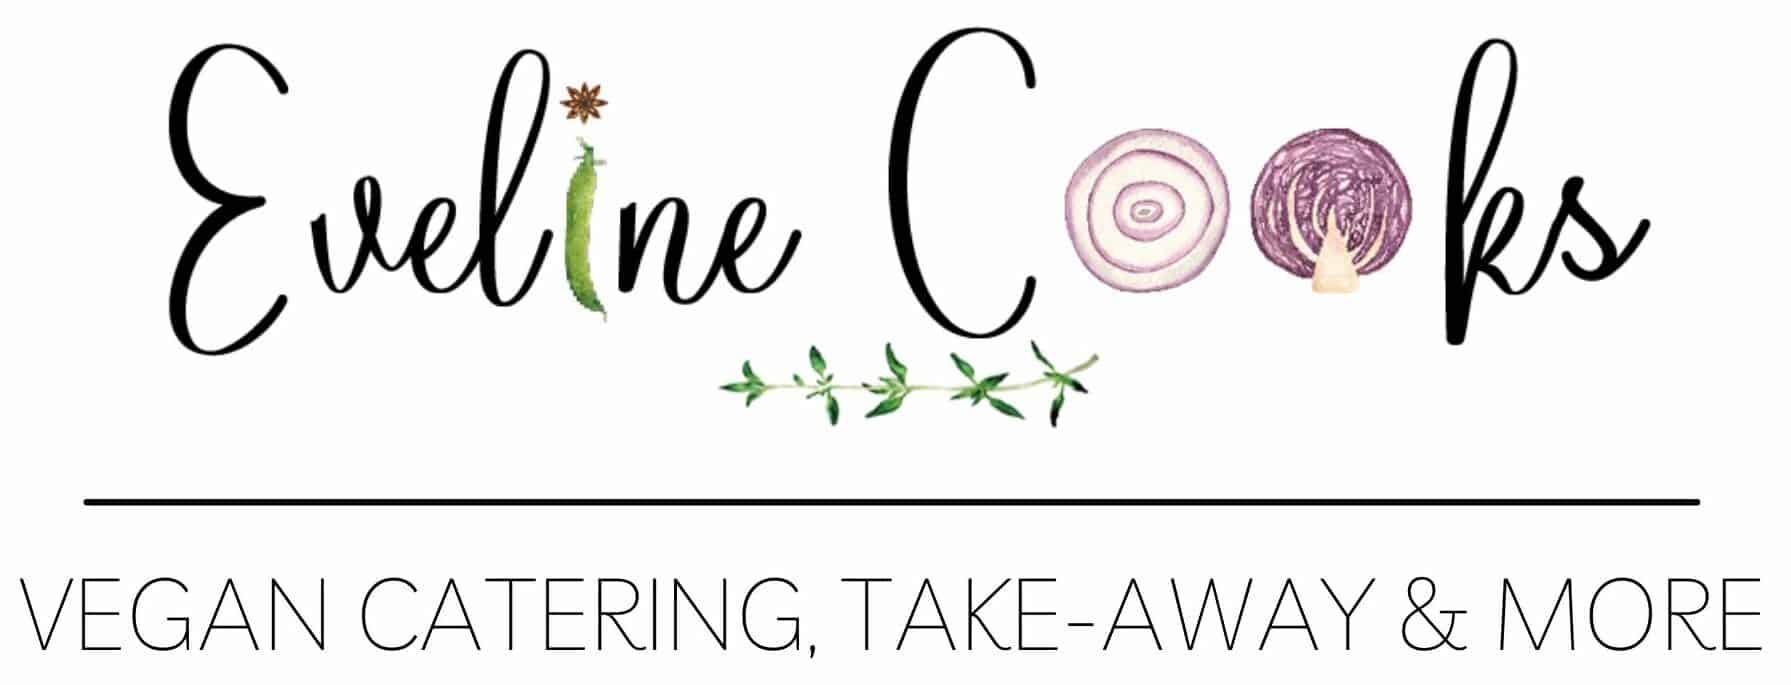 Eveline Cooks - Vegan catering, take-away & more